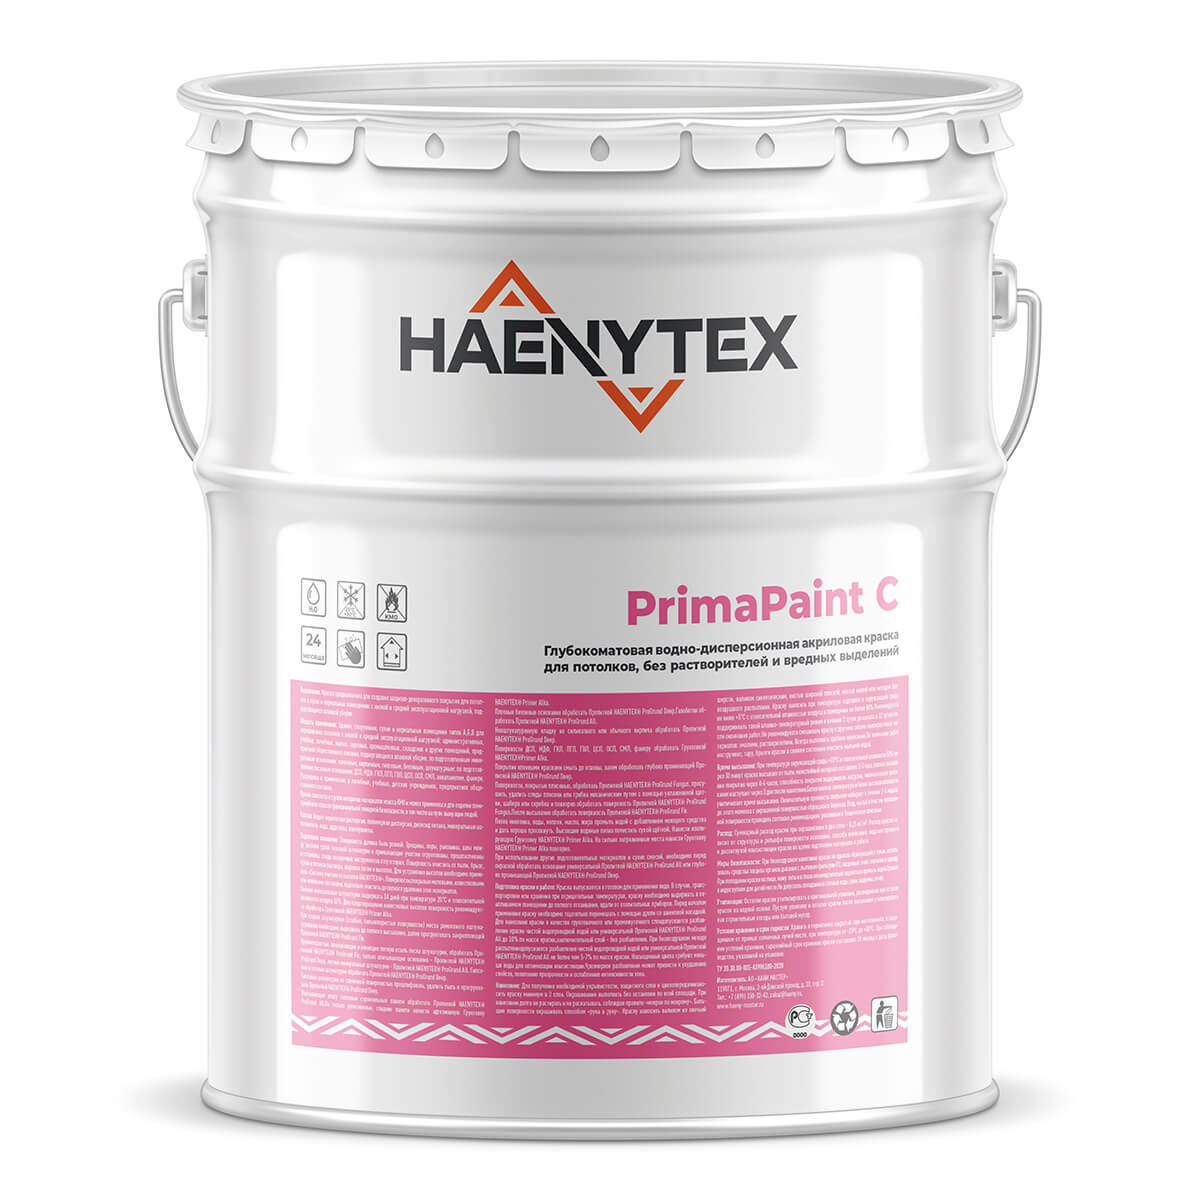 HAENYTEX® PrimaPaint C